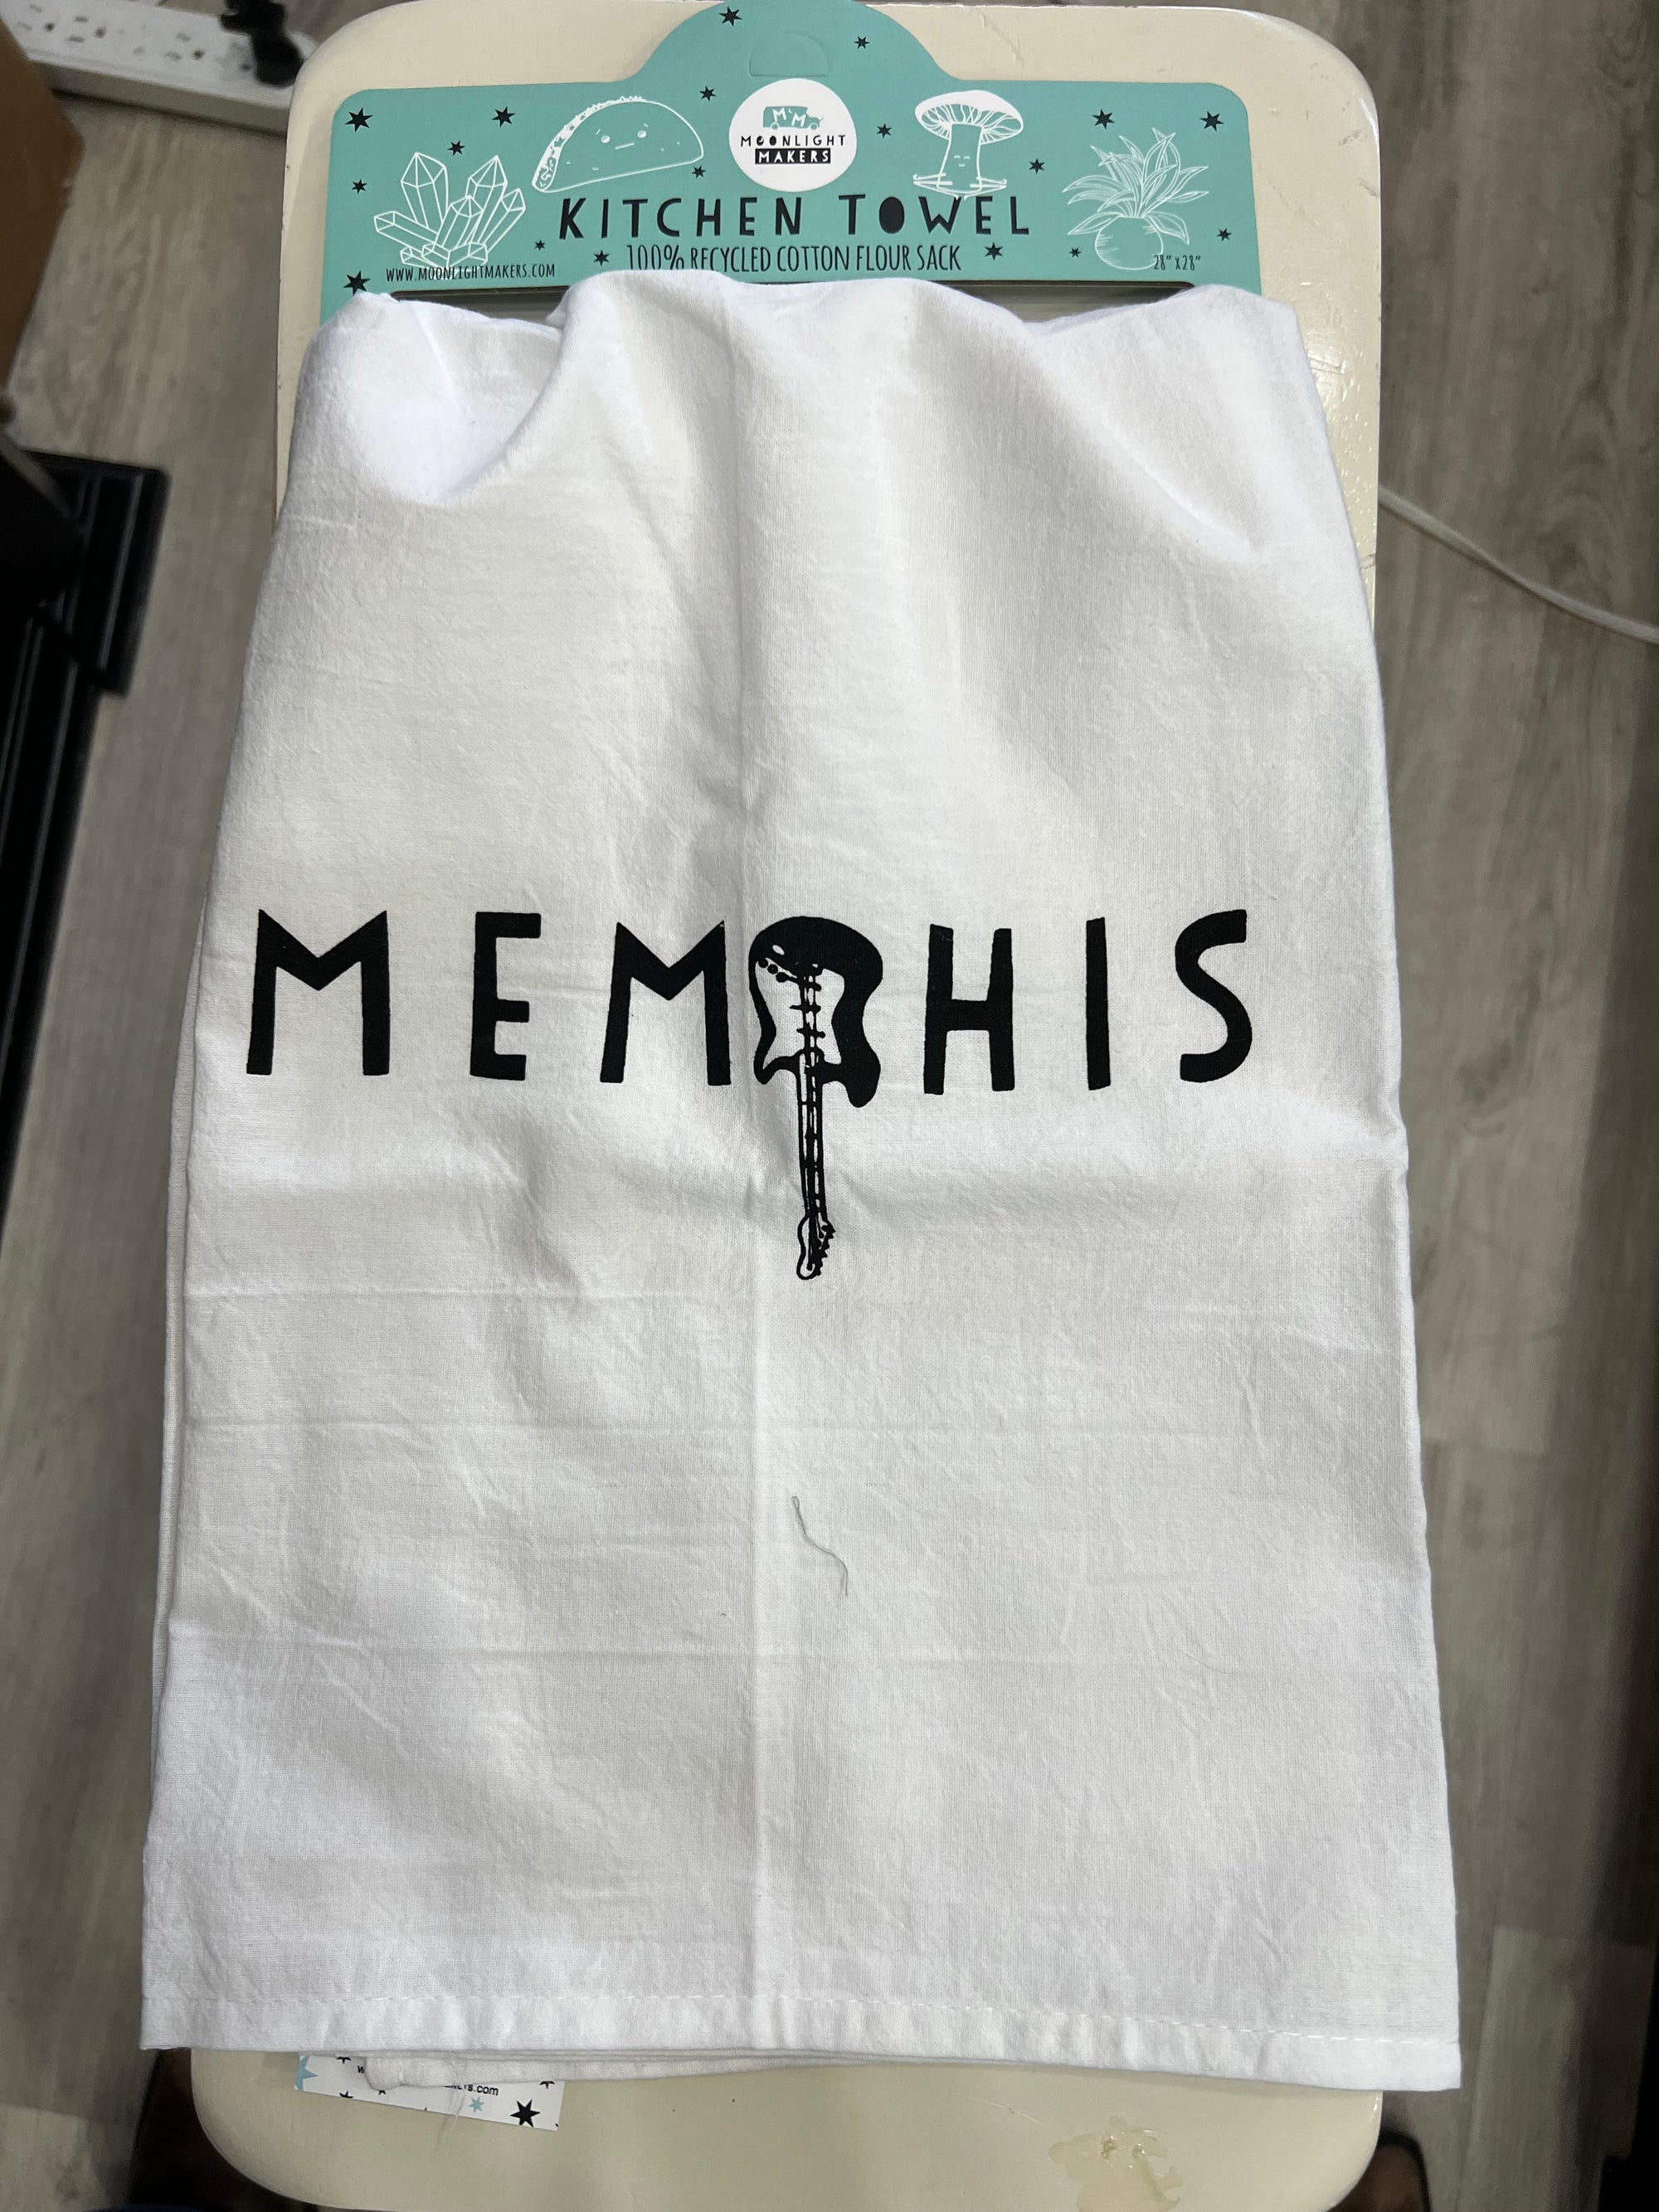 Memphis! - Dish Towels - White